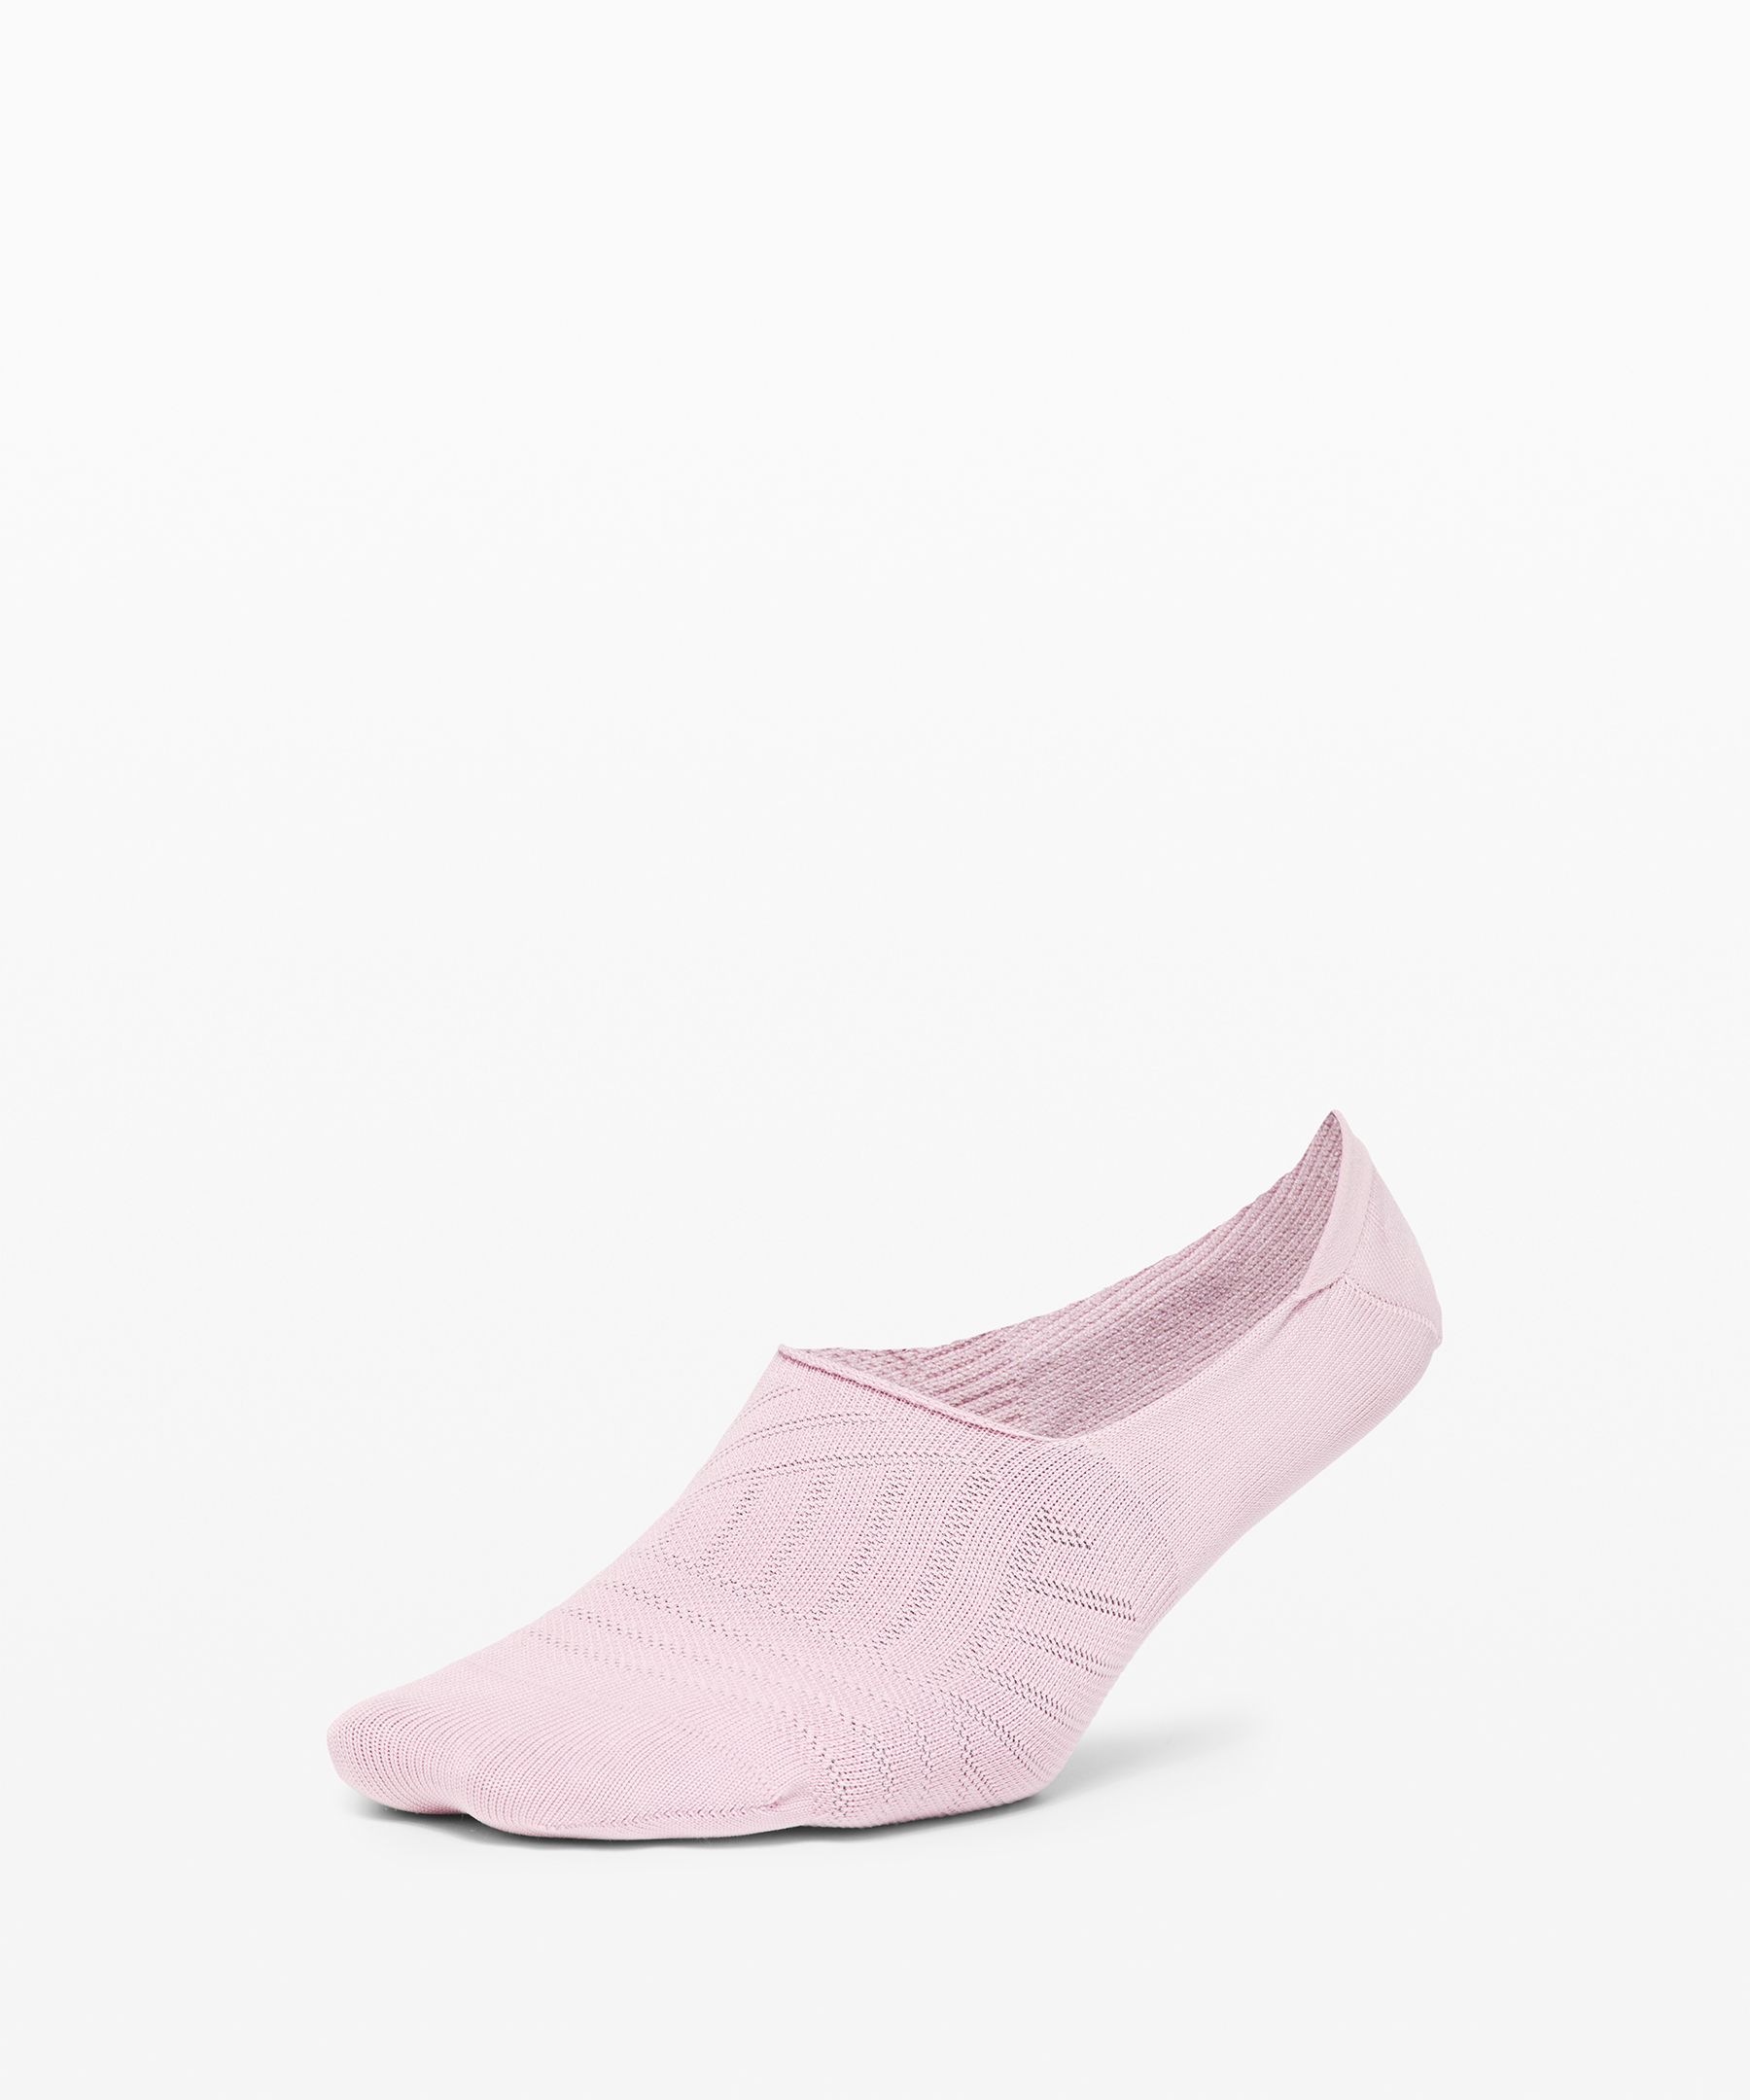 Lululemon Secret Sock In Pink